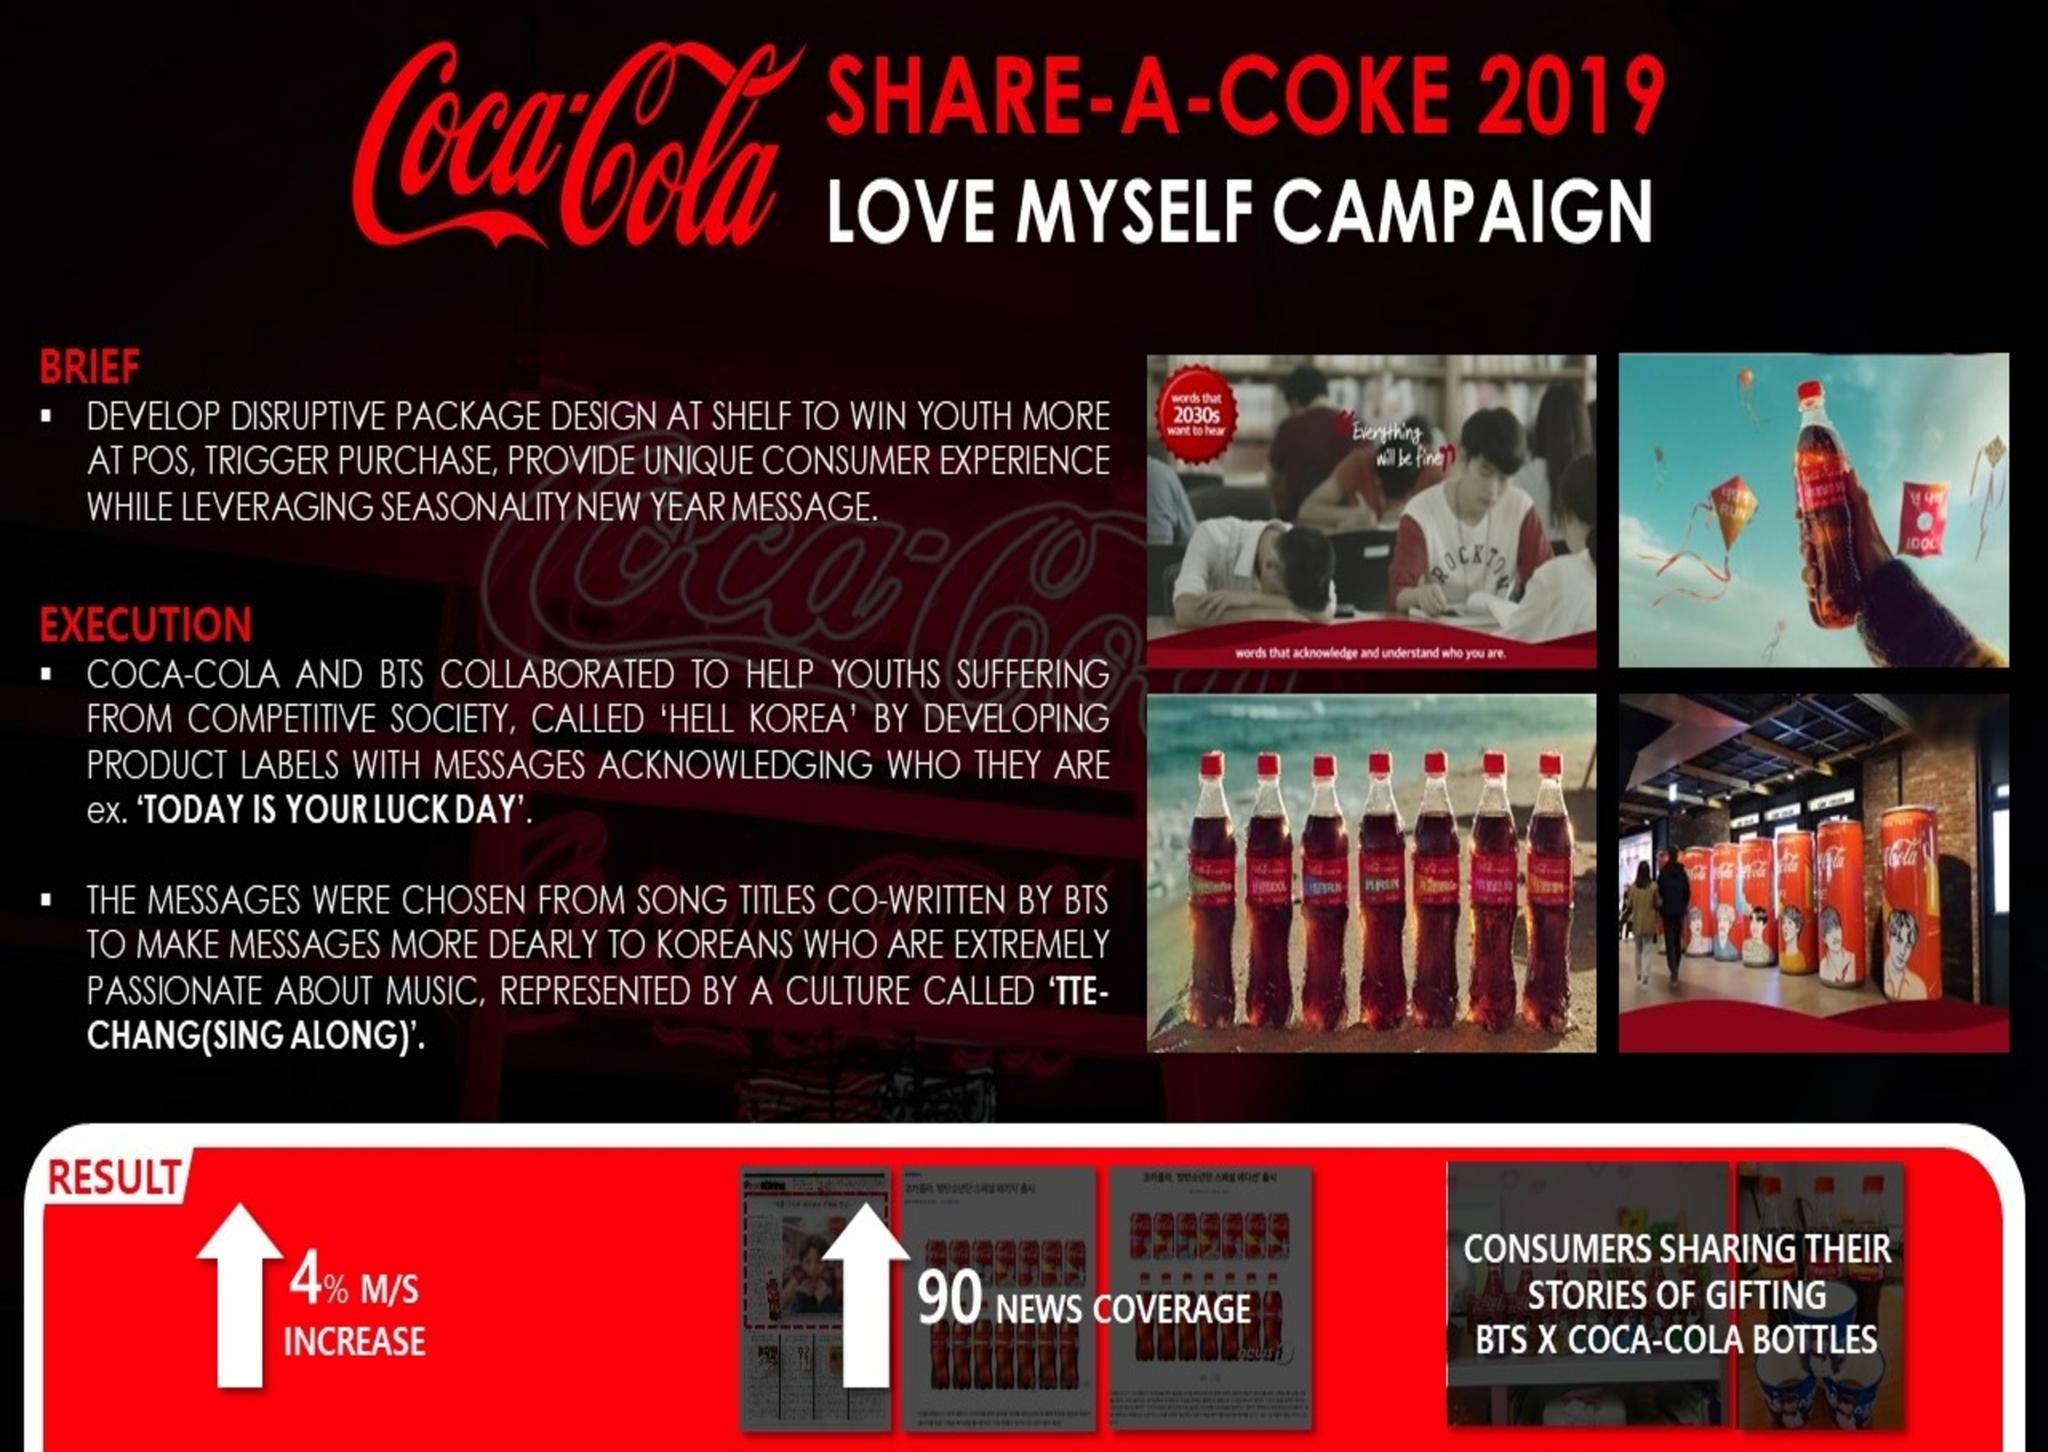 Share a Coke 2019 - Love Myself Campaign